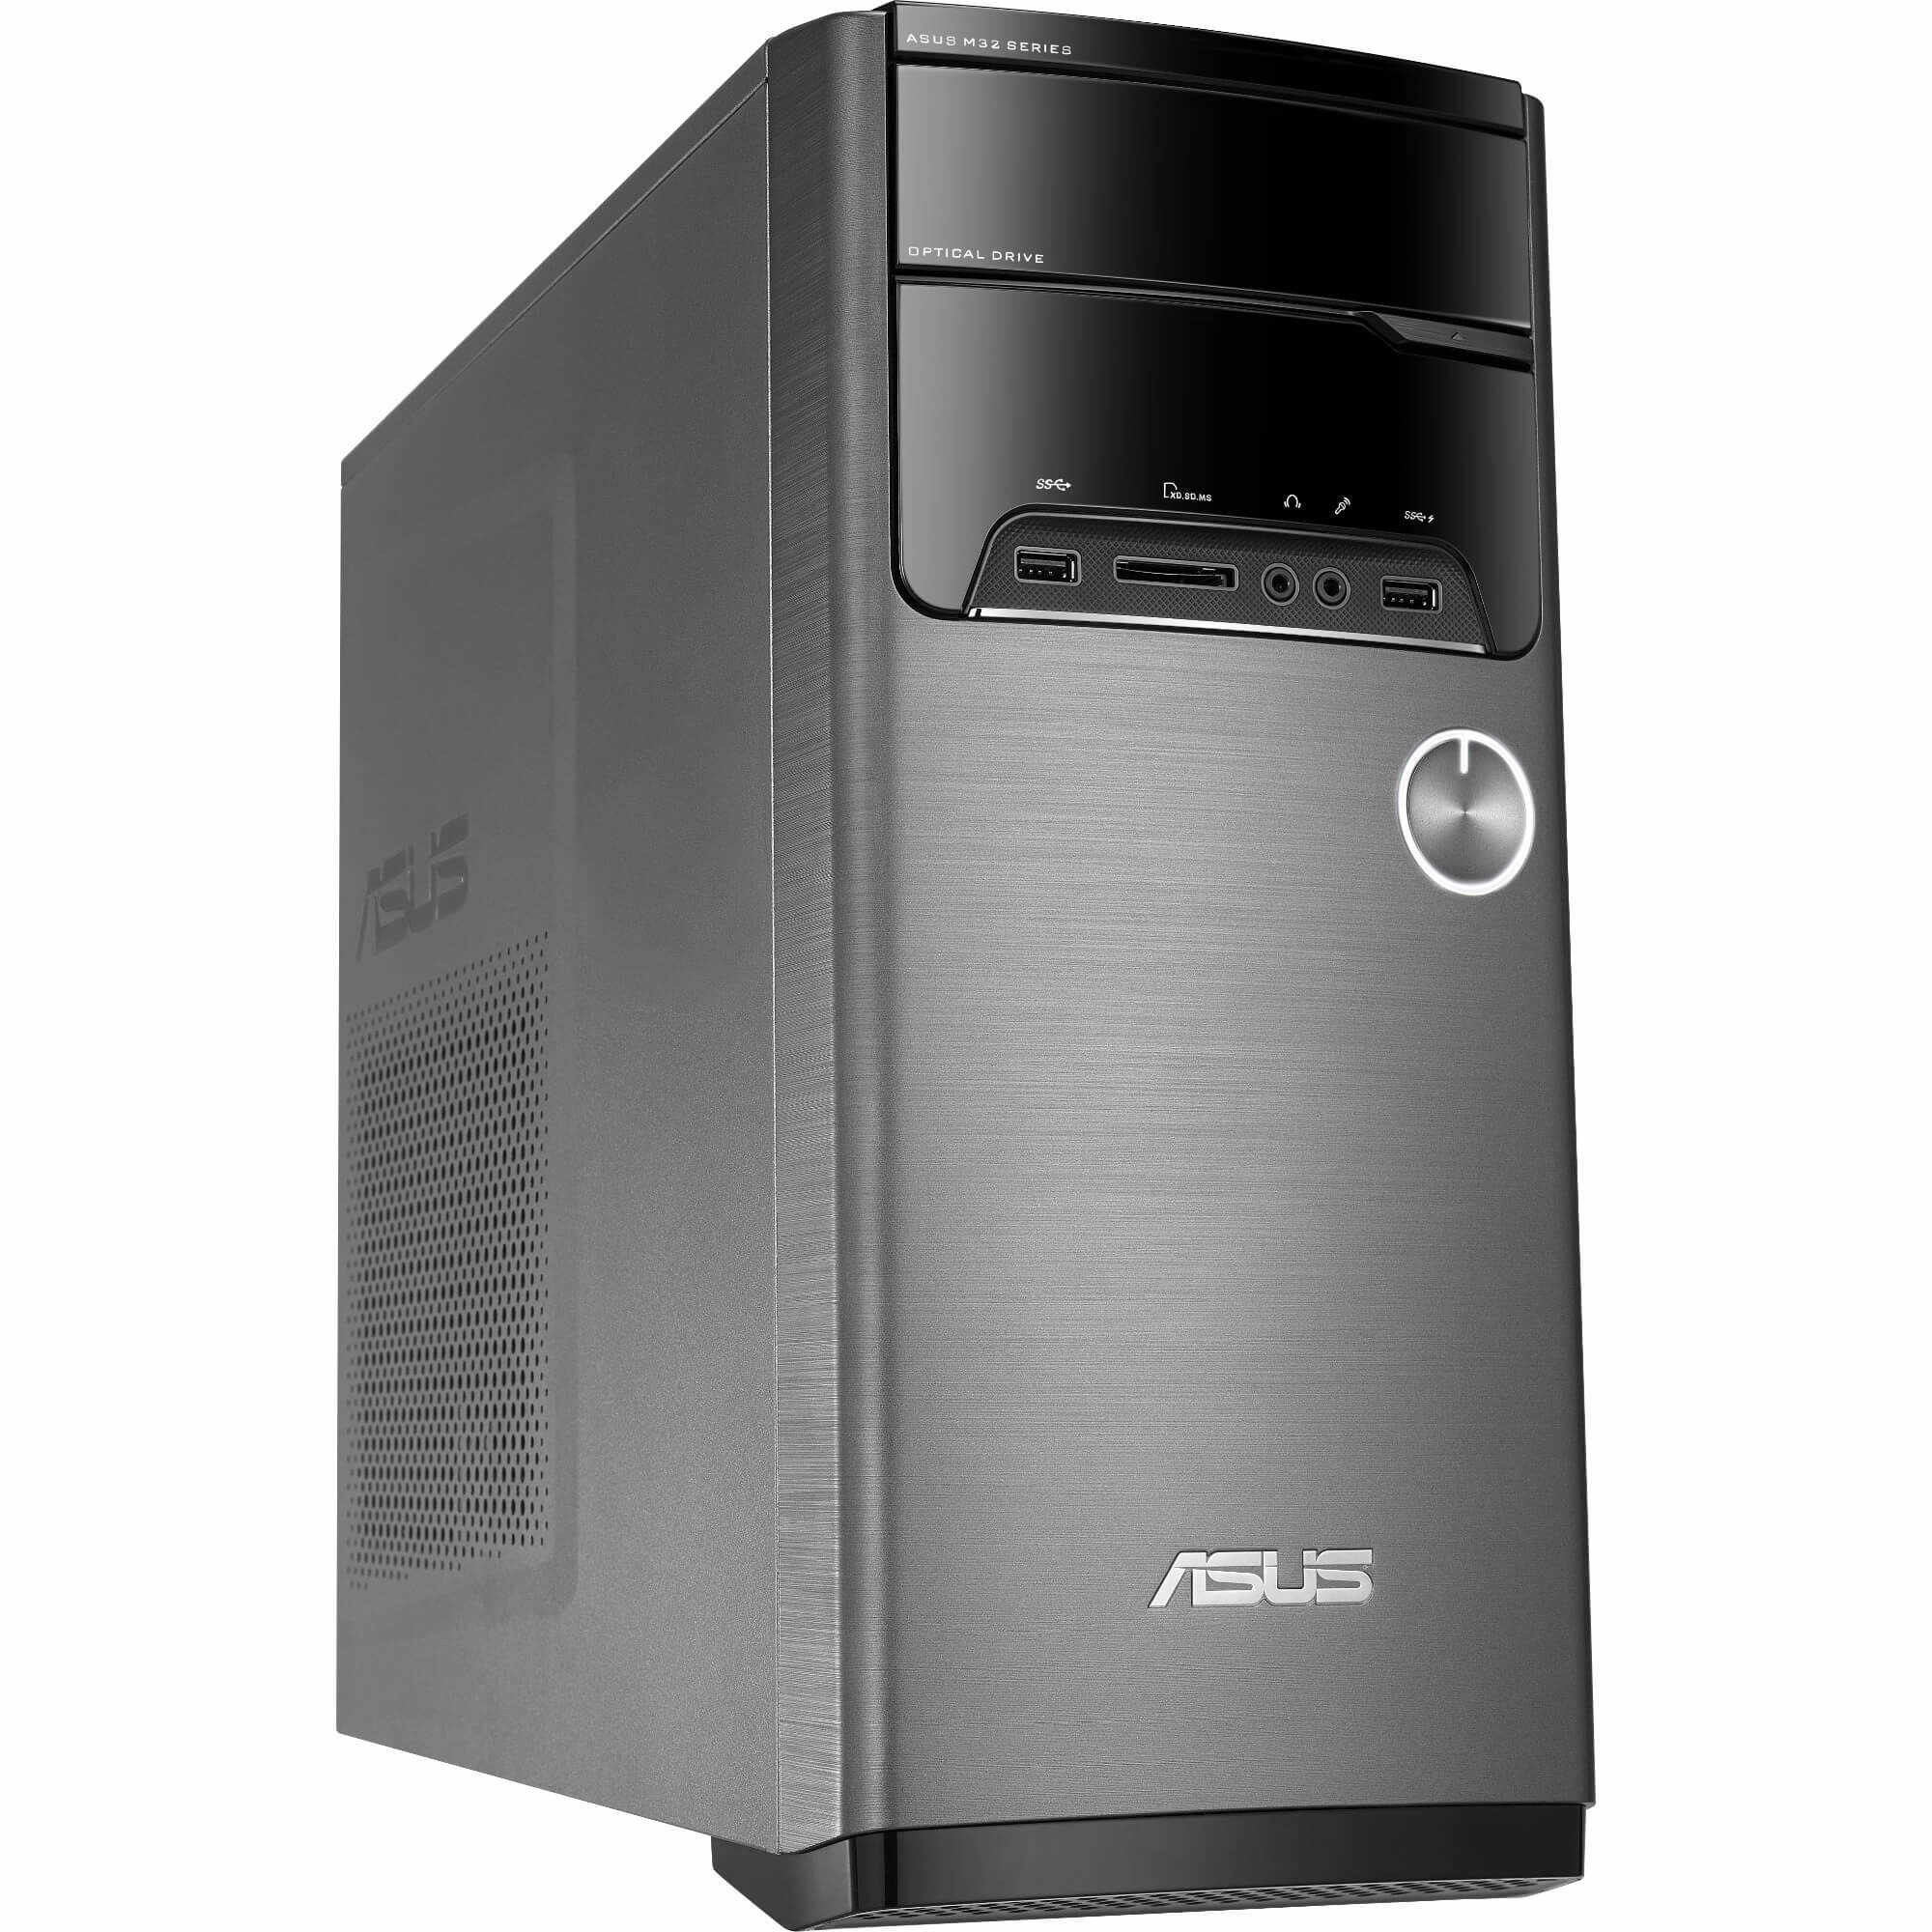 Sistem Desktop PC ASUS M32CD-K-RO001D, Intel Core i5-7400, 8GB DDR4, HDD 1TB, nVidia GeForce GTX 1050 2GB, Free DOS